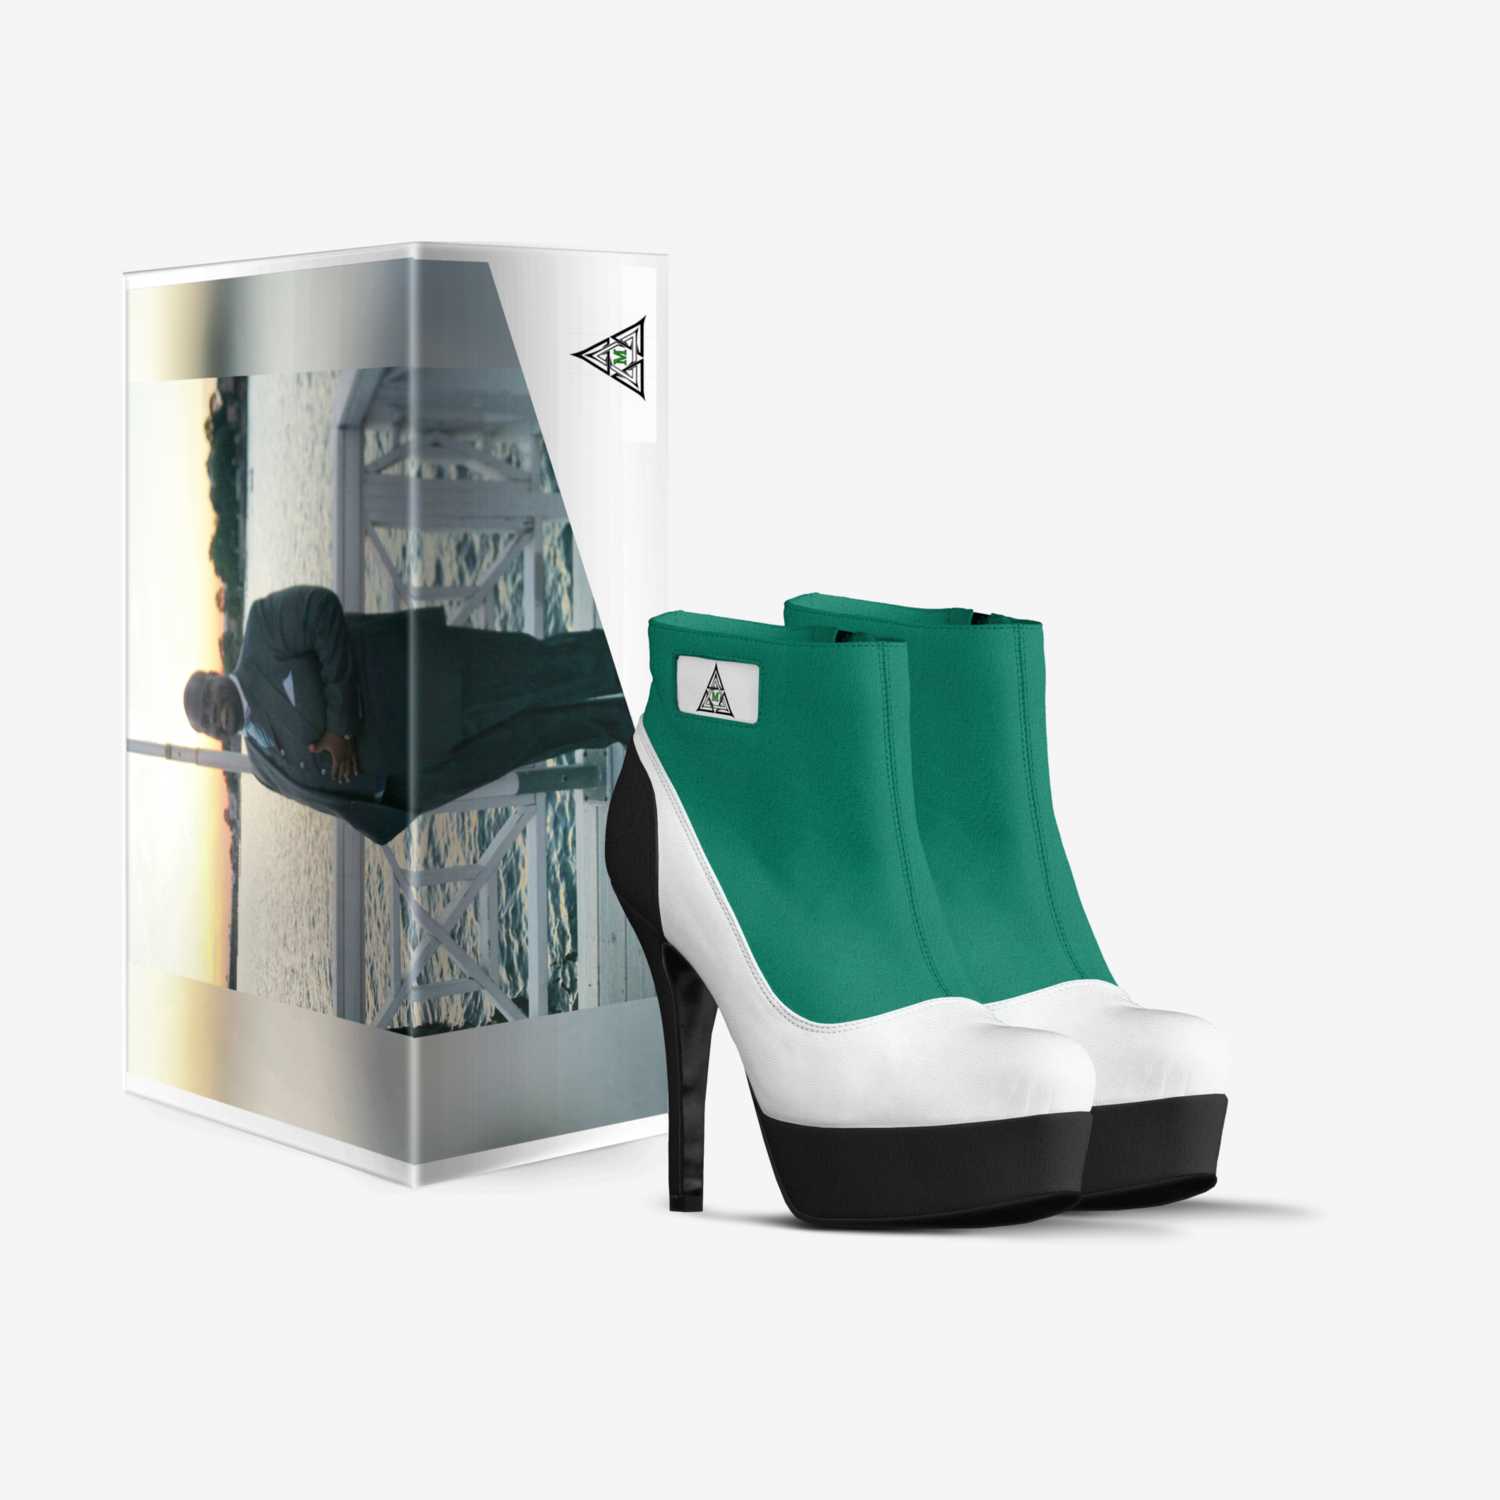 Murphnetti AS custom made in Italy shoes by Tyriek Murphy | Box view